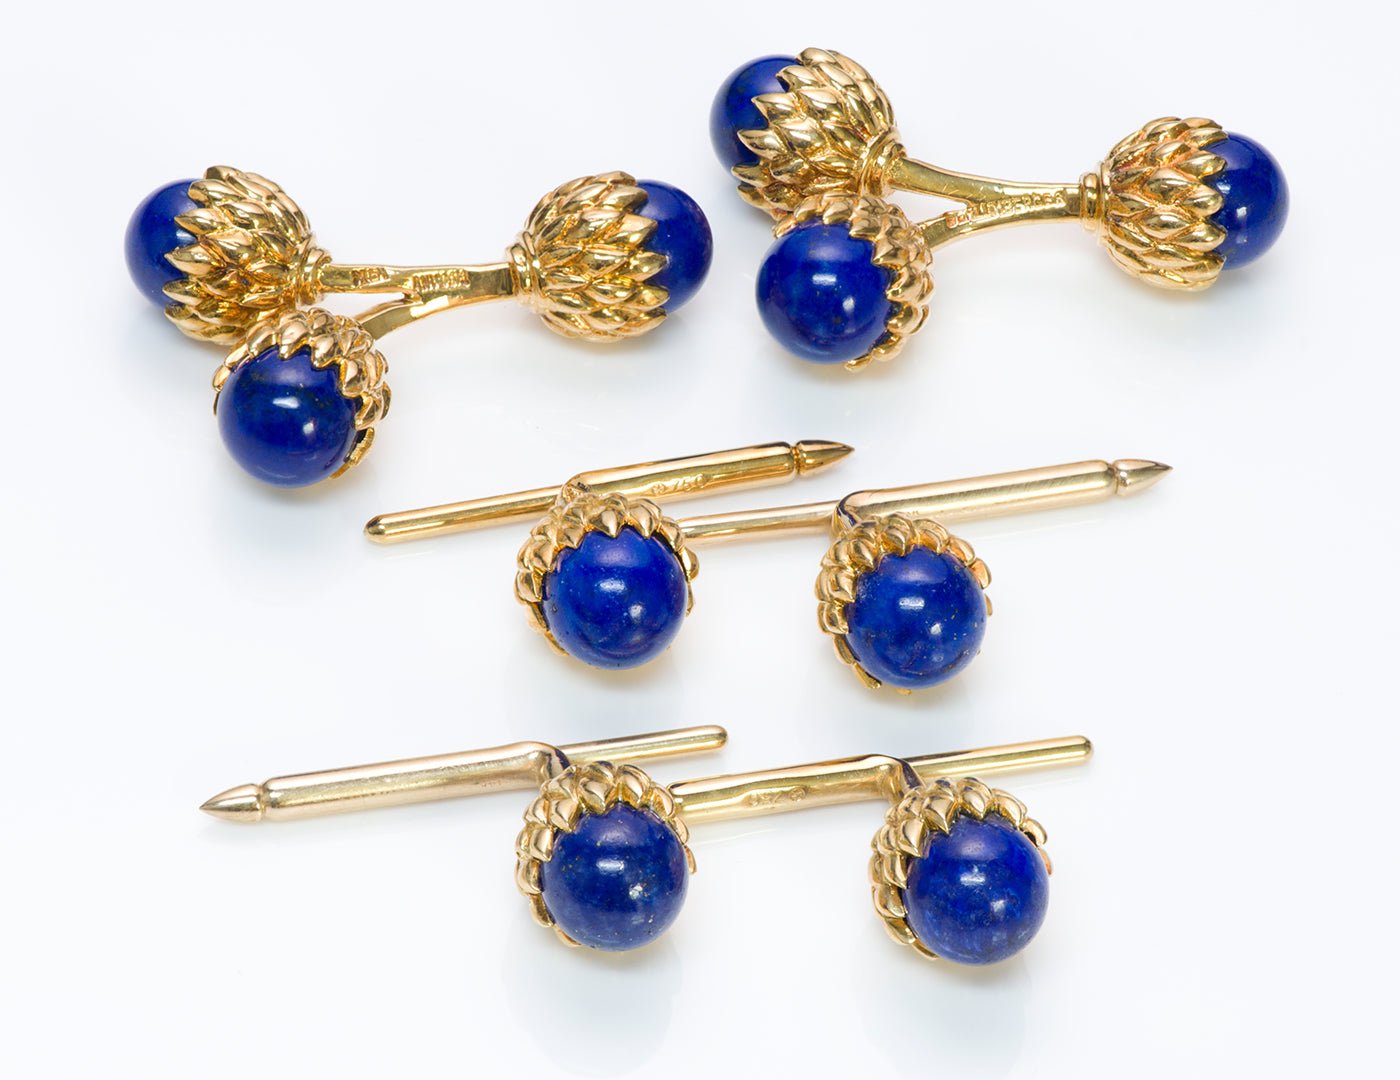 Tiffany & Co. Schlumberger Double Acorn Lapis 18K Gold Cufflink Stud Set